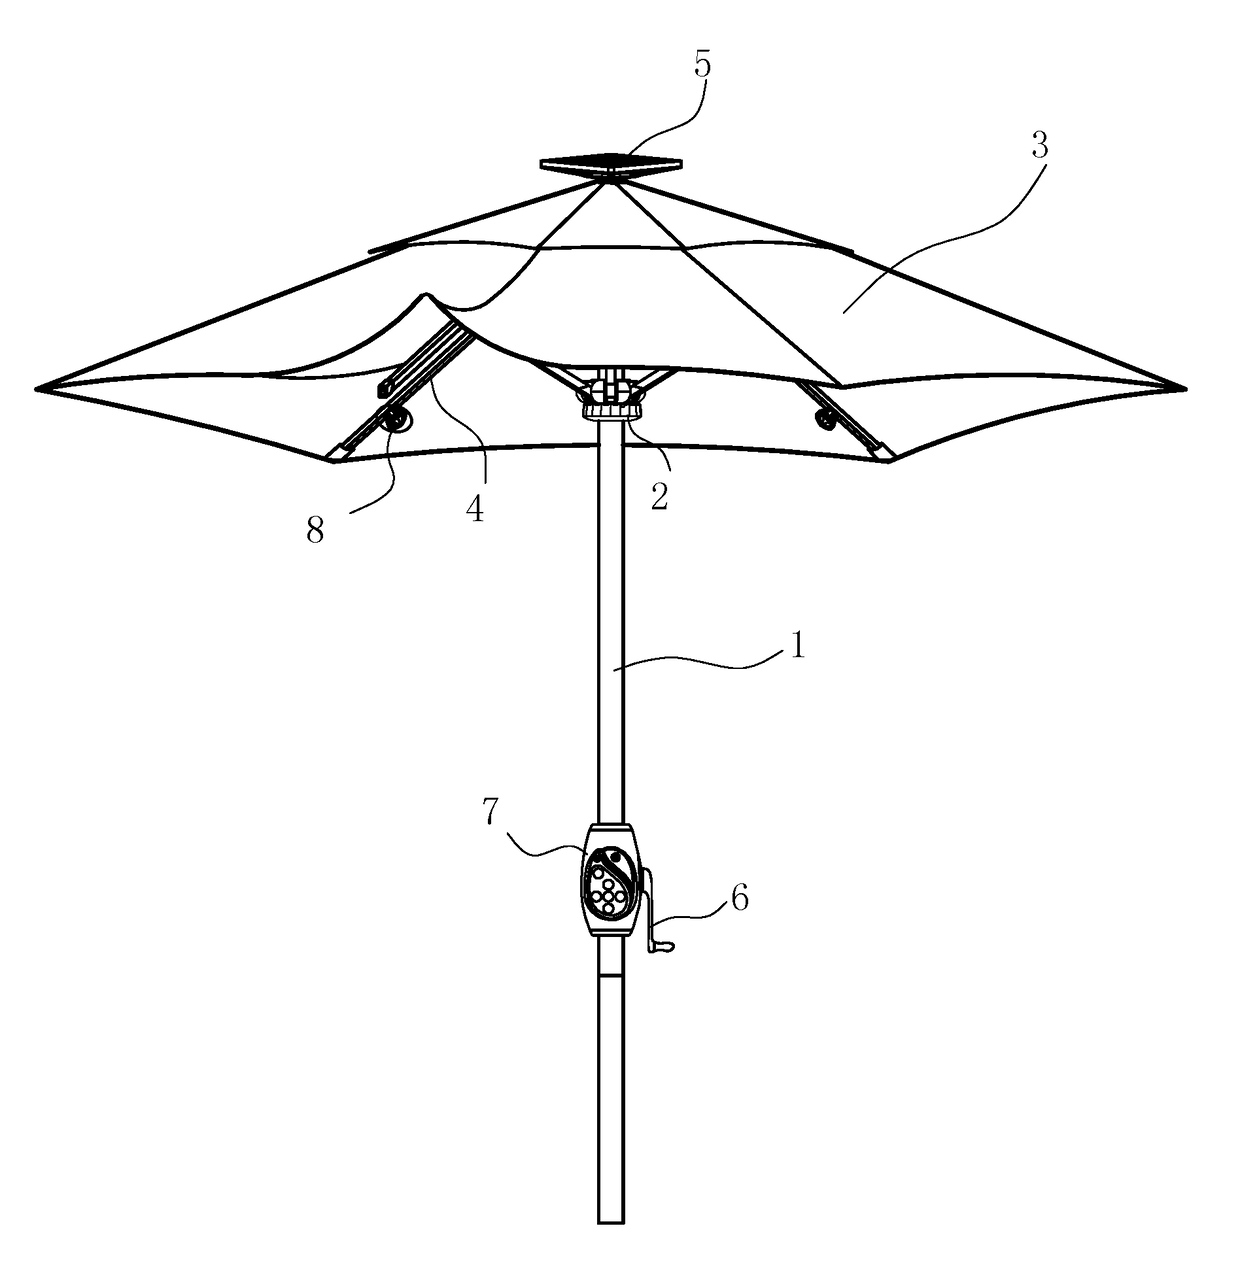 Umbrella with a bluetooth sound device